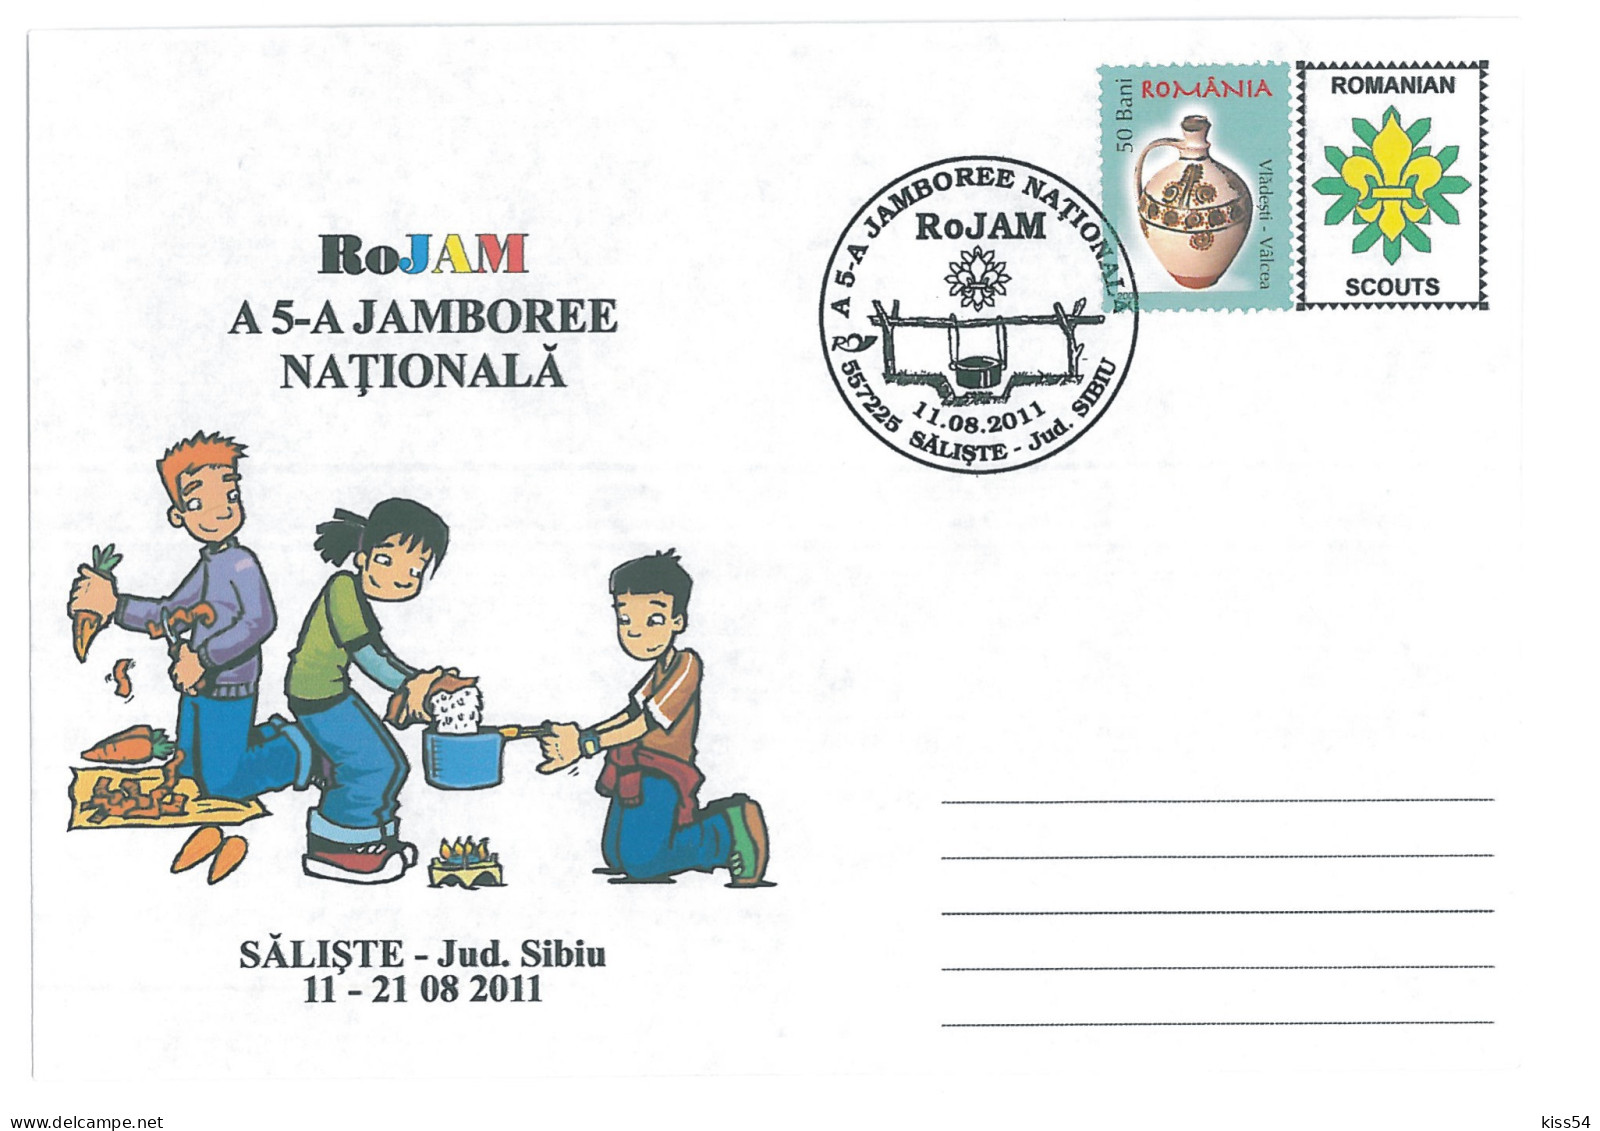 SC 47 - 1298 ROMANIA, National JAMBOREE, Scout - Cover - Used - 2011 - Briefe U. Dokumente